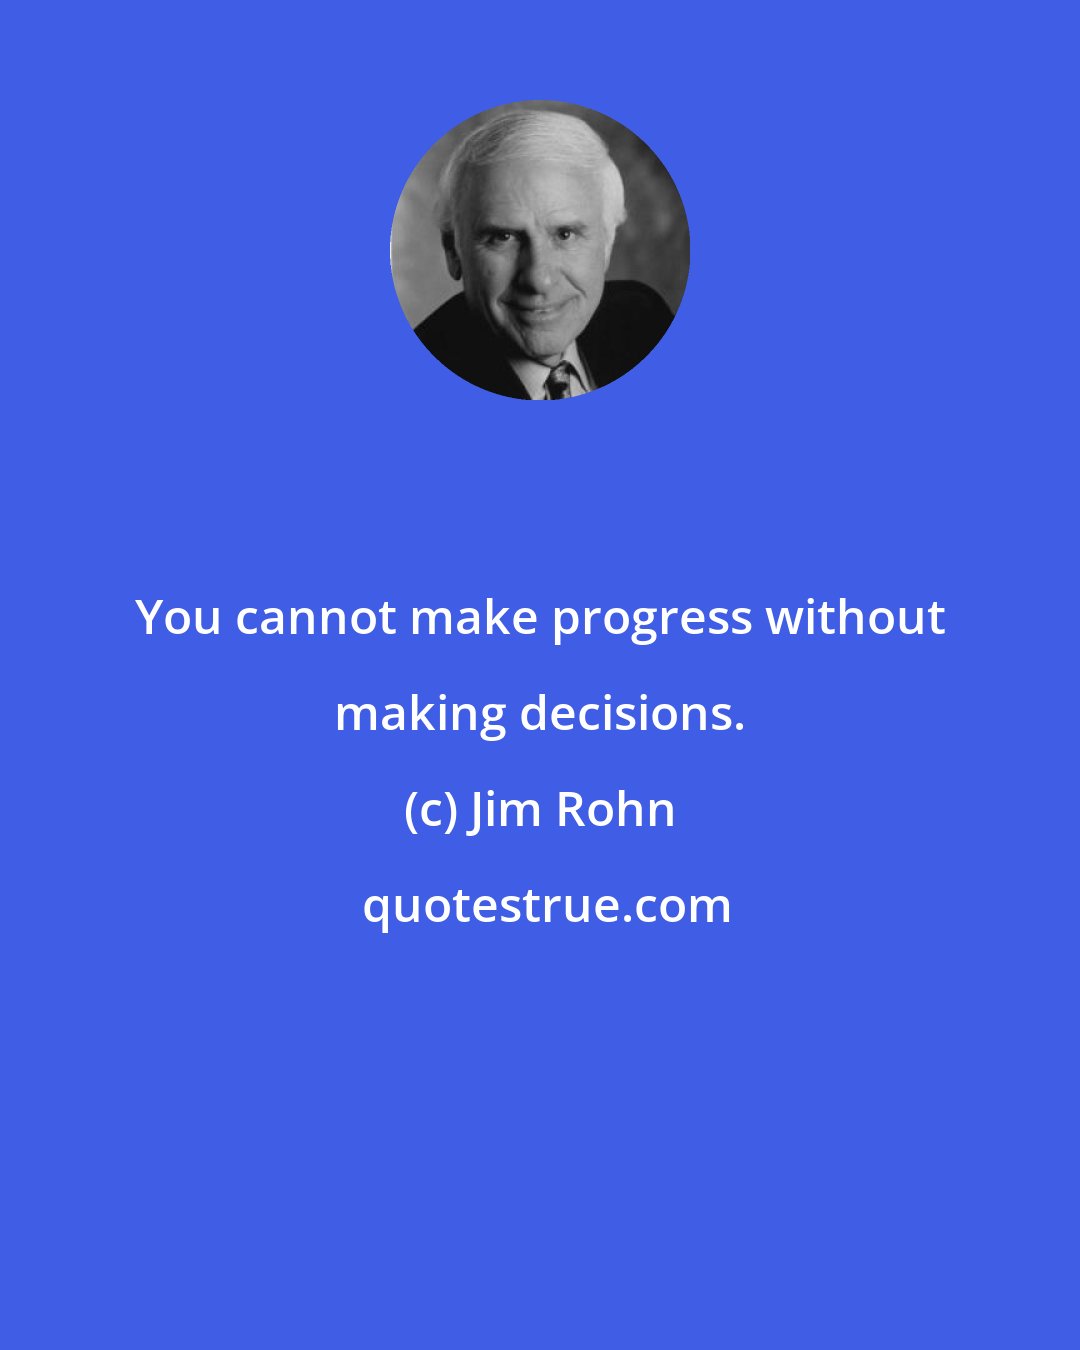 Jim Rohn: You cannot make progress without making decisions.